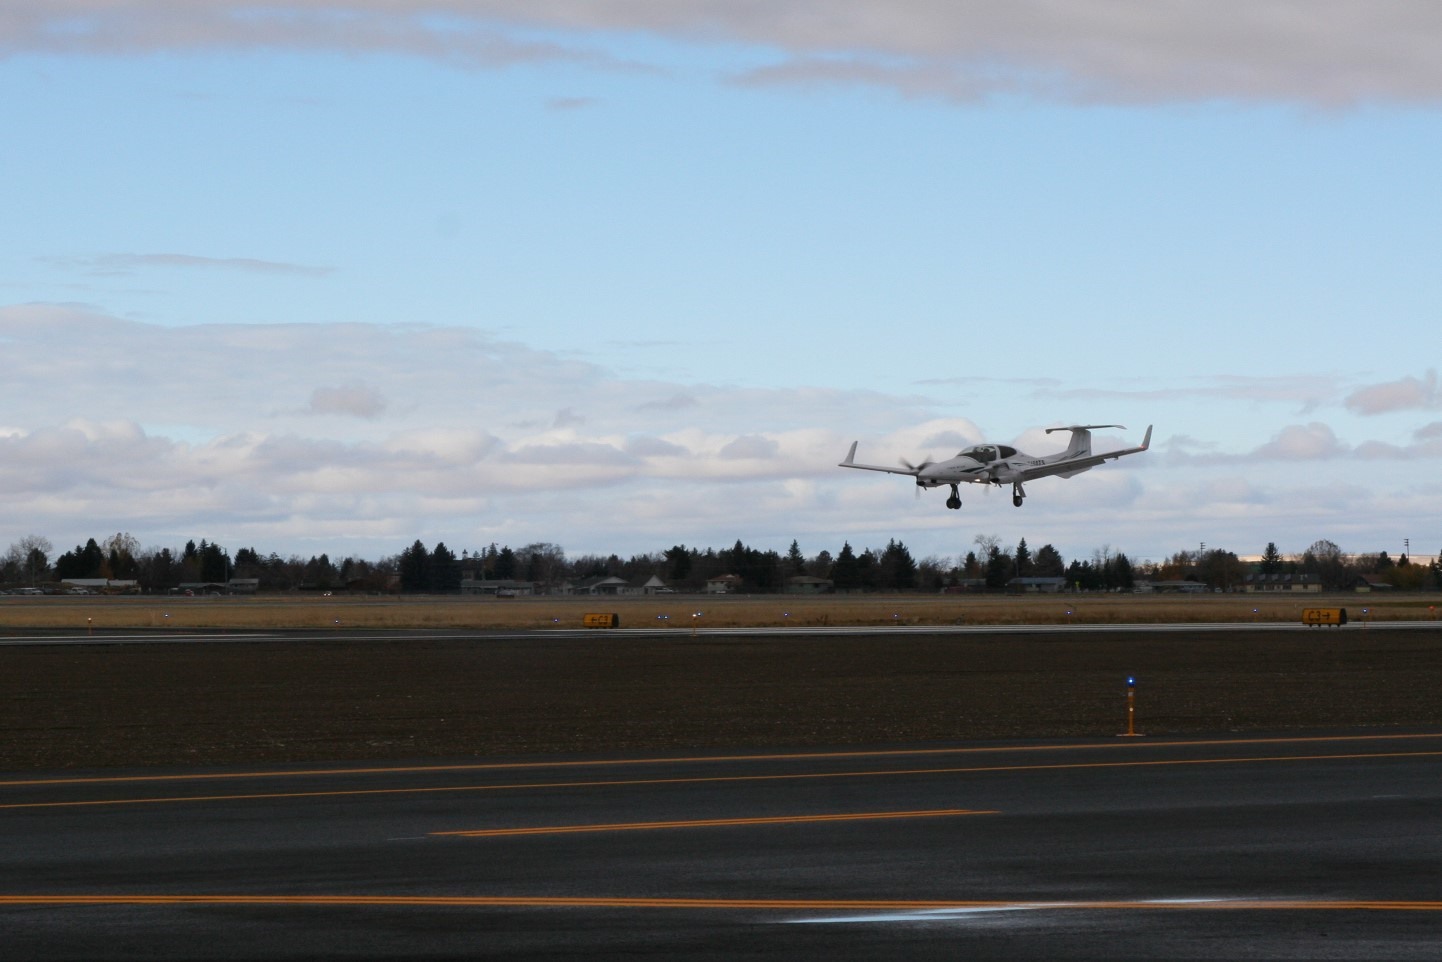 First landing on runway 11-29 by Ben Walton of Summit Aviation